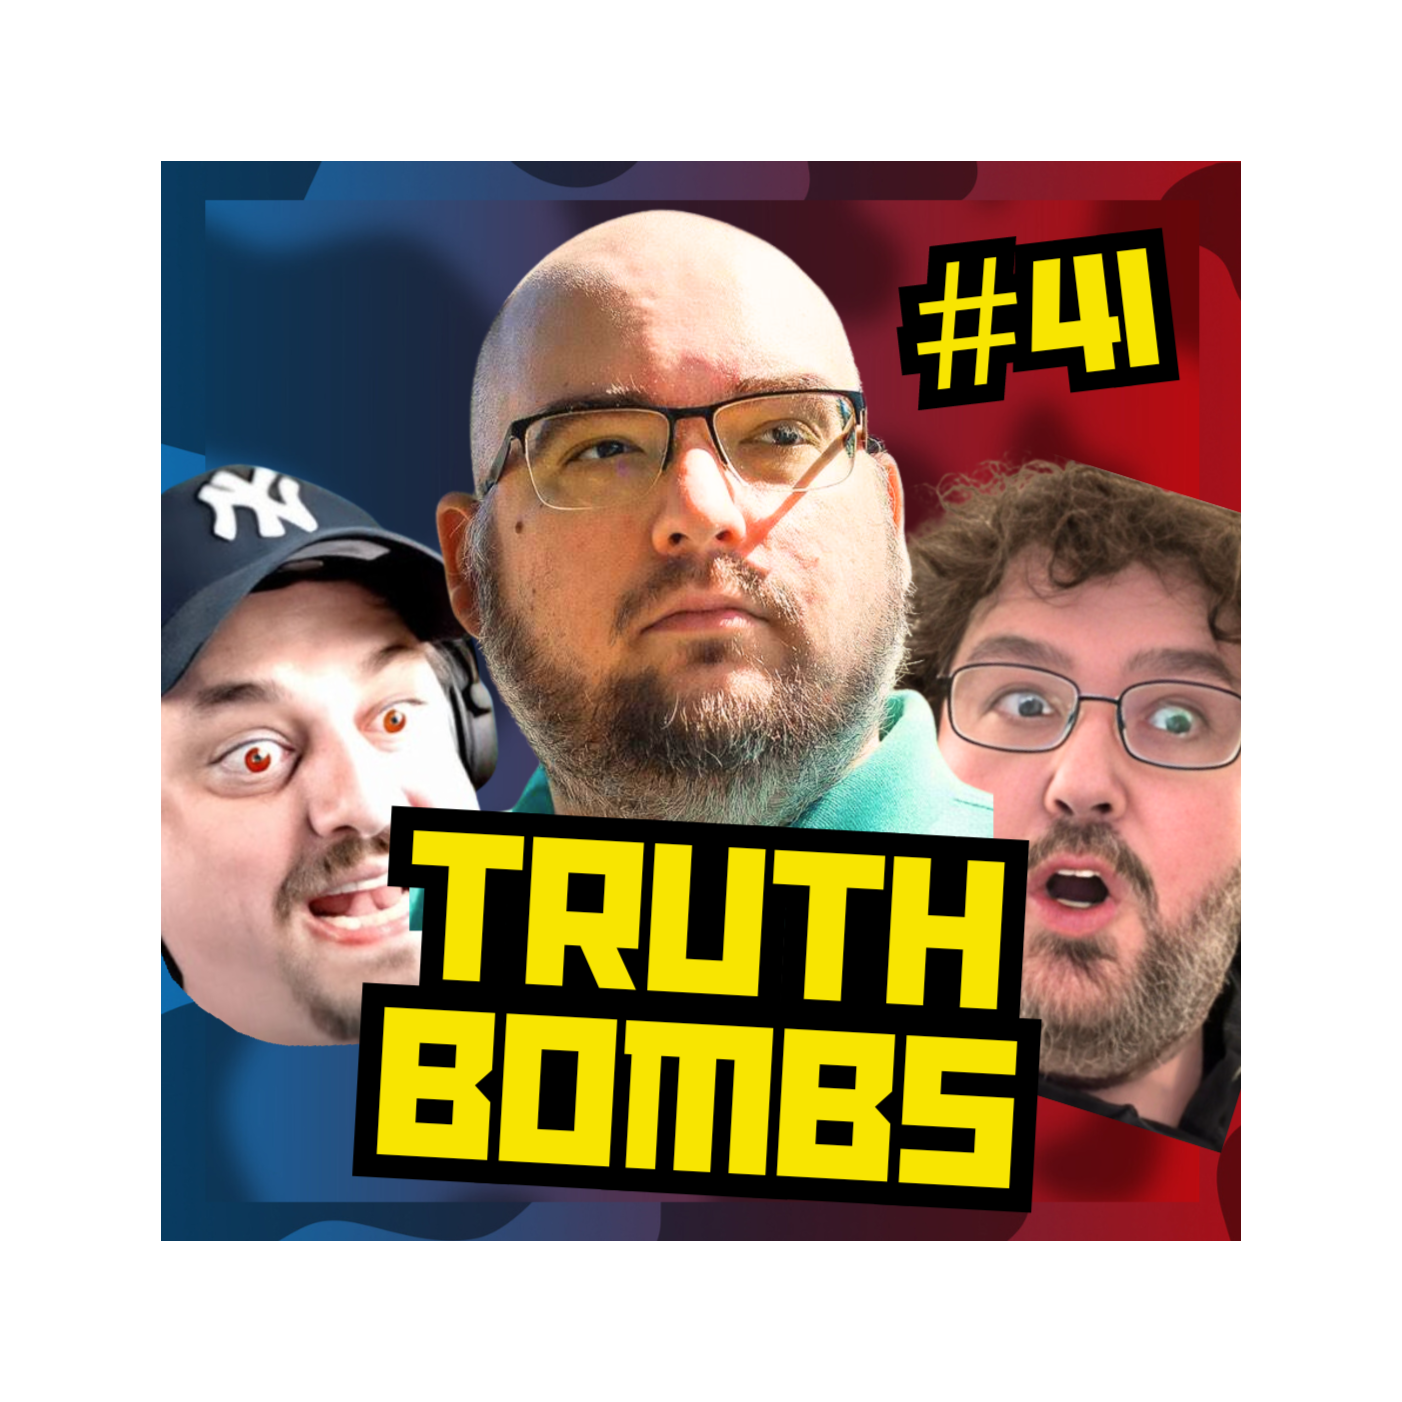 TRUTH BOMBS!